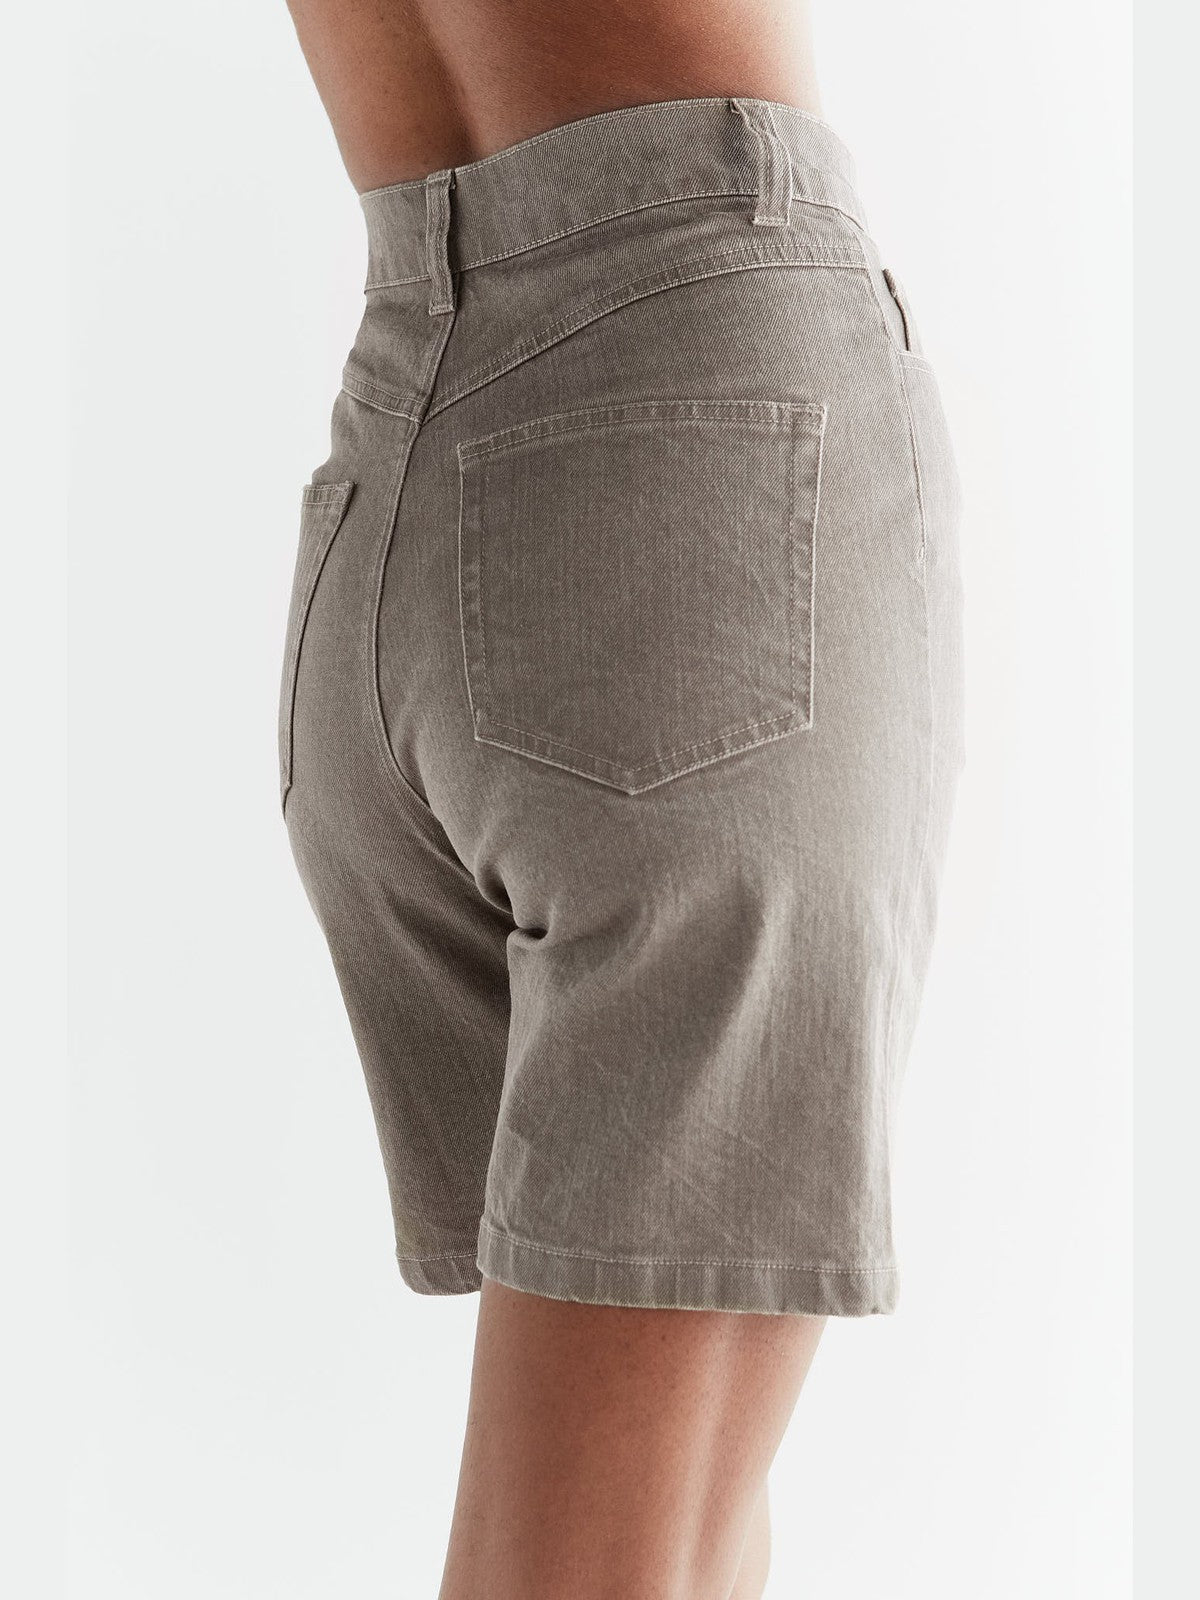 WA3018-395 | Women Denim Shorts in Ton Waschung - Pebble